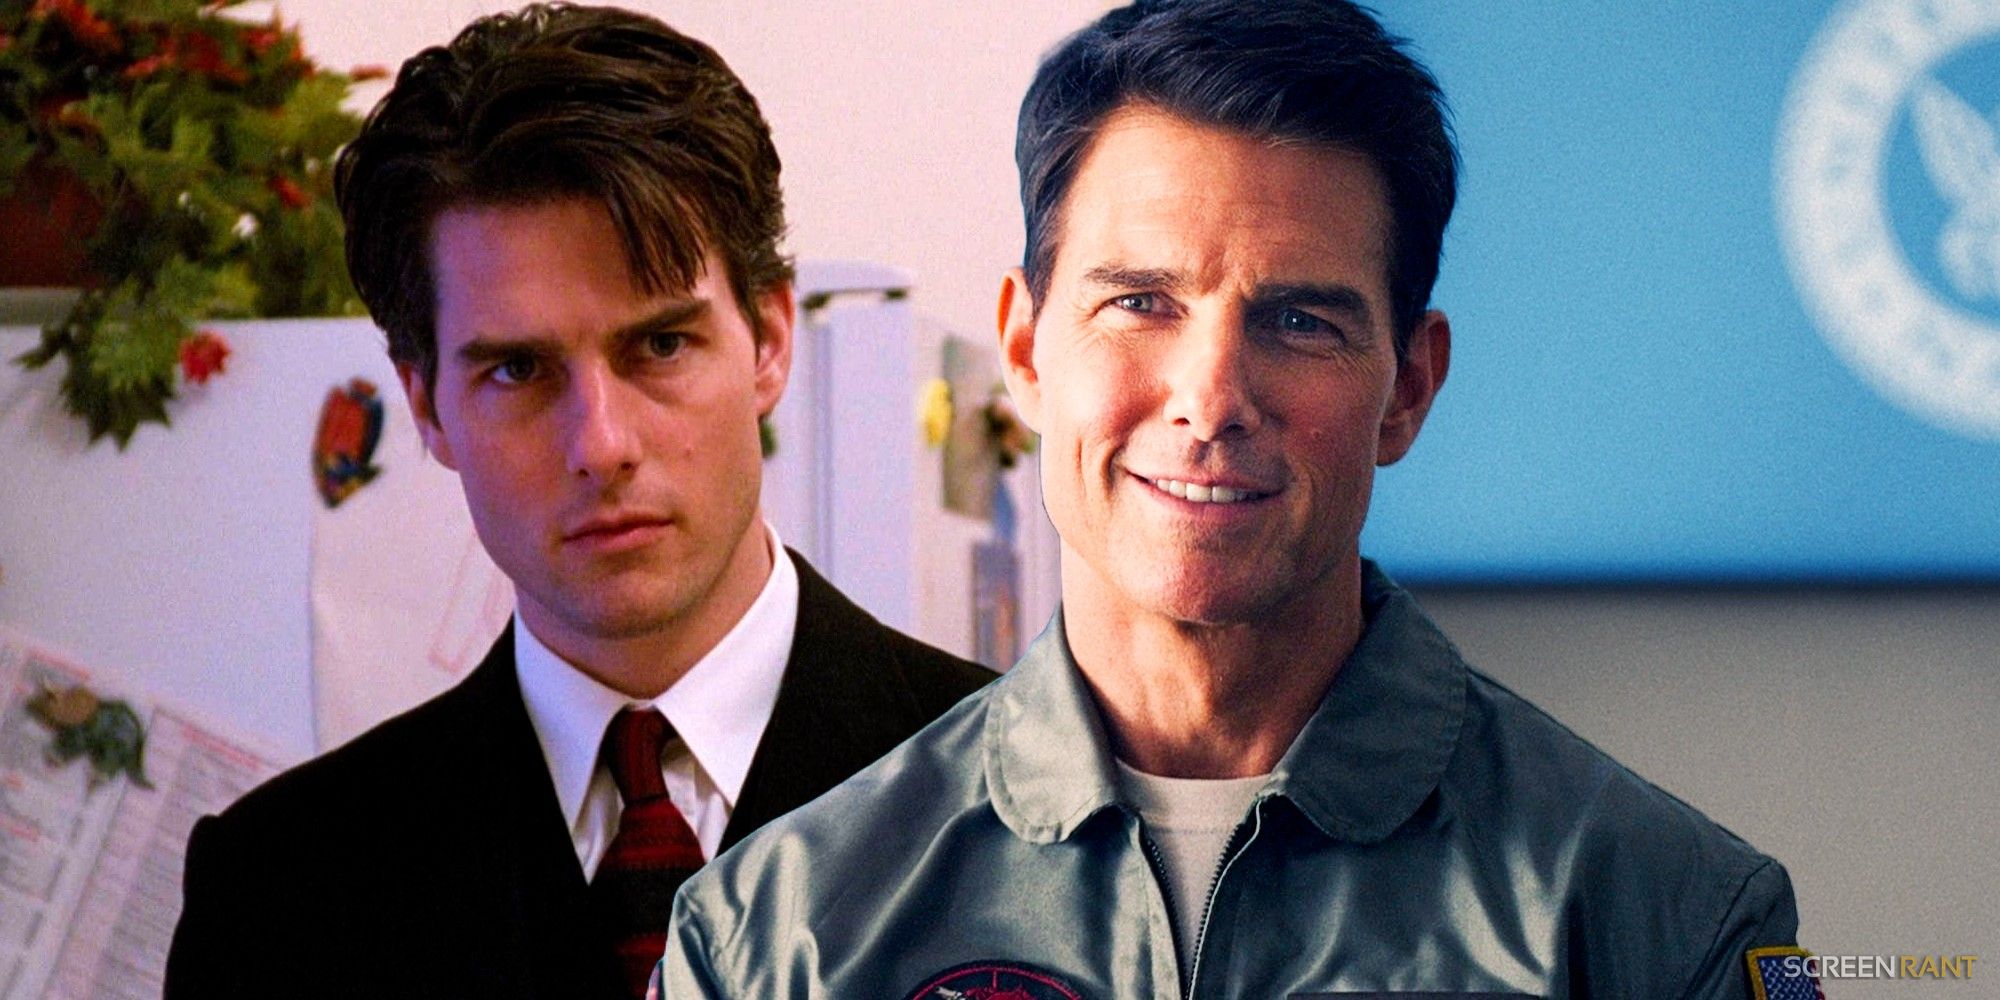 Tom Cruise in Eyes Wide Shut and Top Gun: Maverick